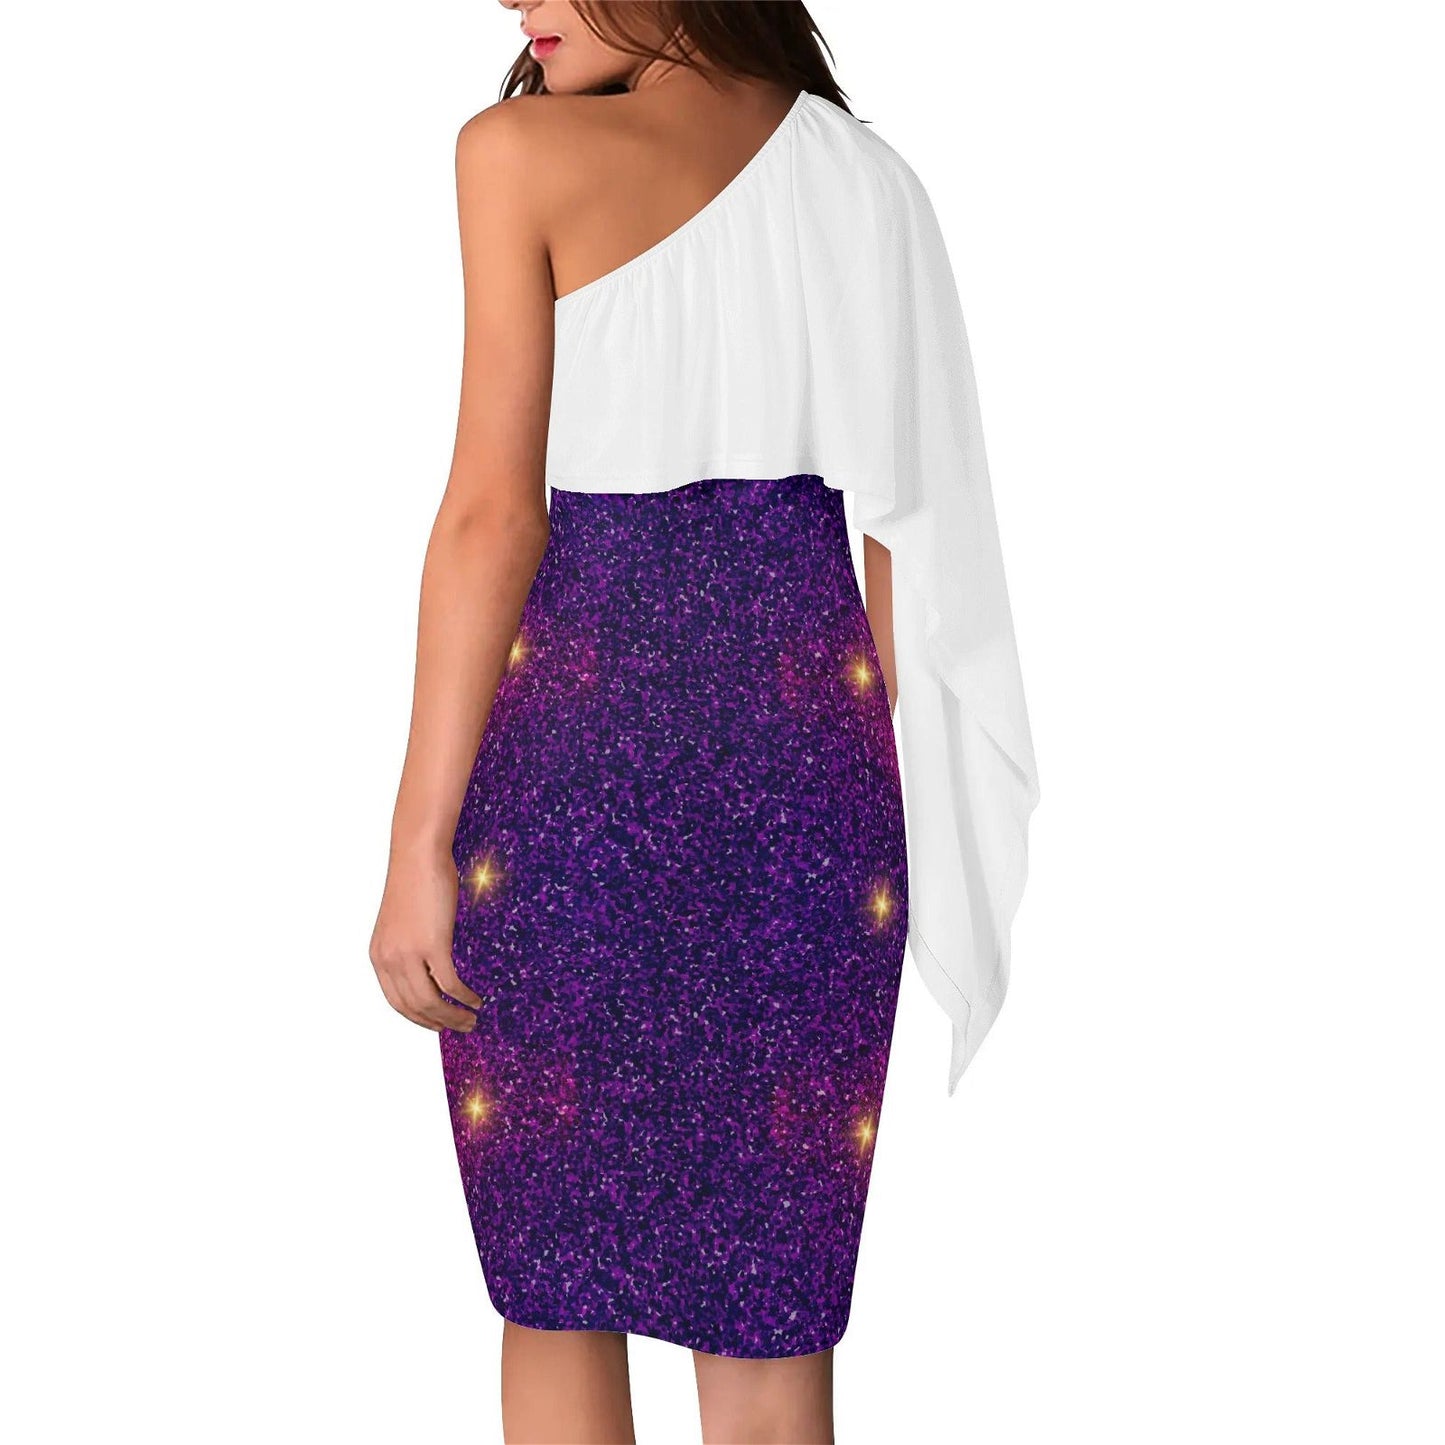 Elegant White Purple One Shoulder Evening Dress - Formal Gown for Women - Iron Phoenix GHG